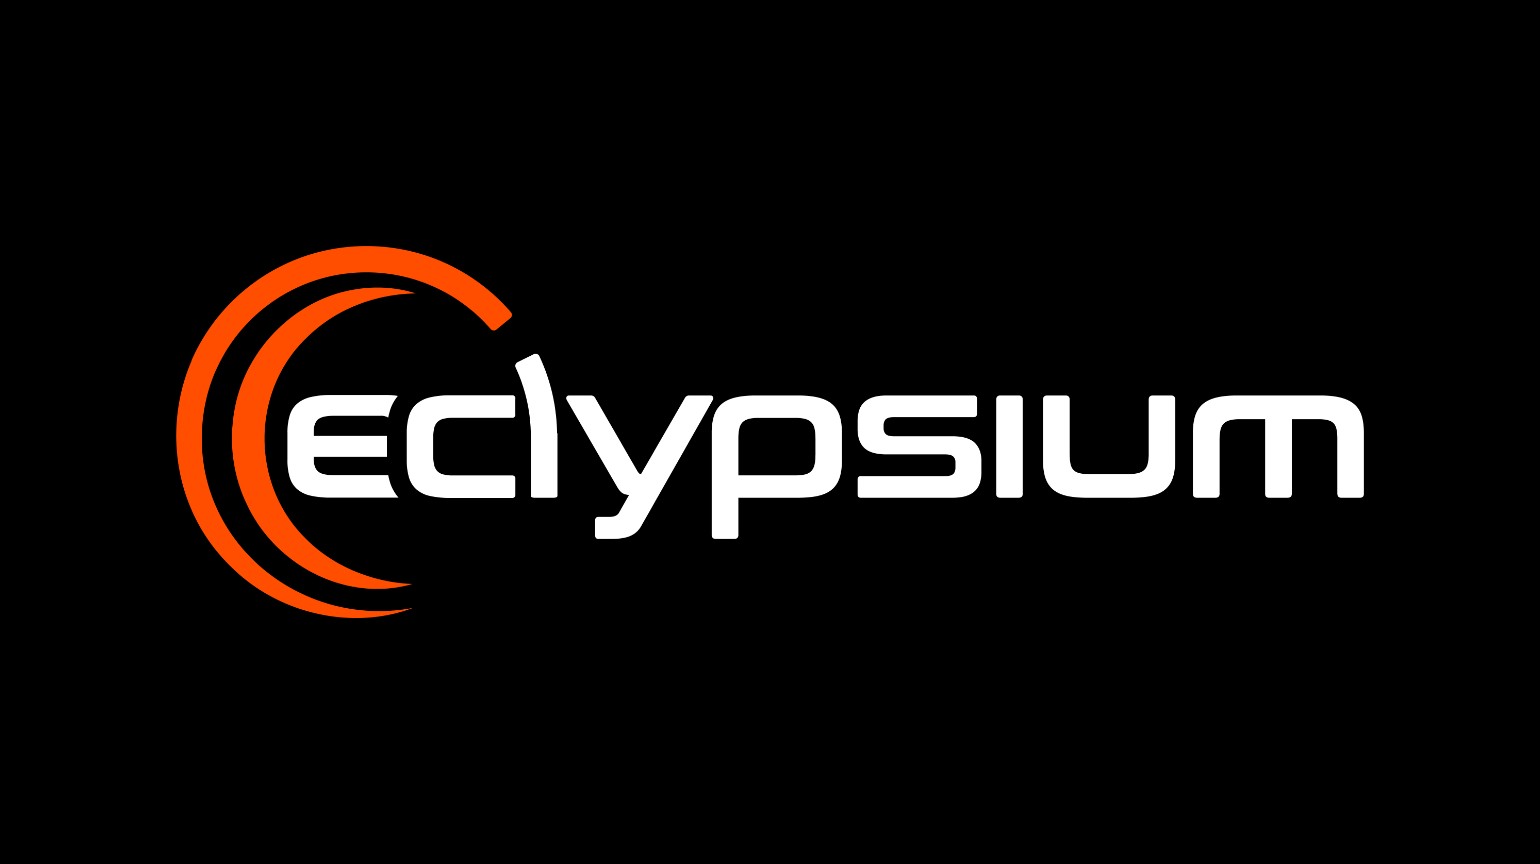 Eclypsium Logo on black